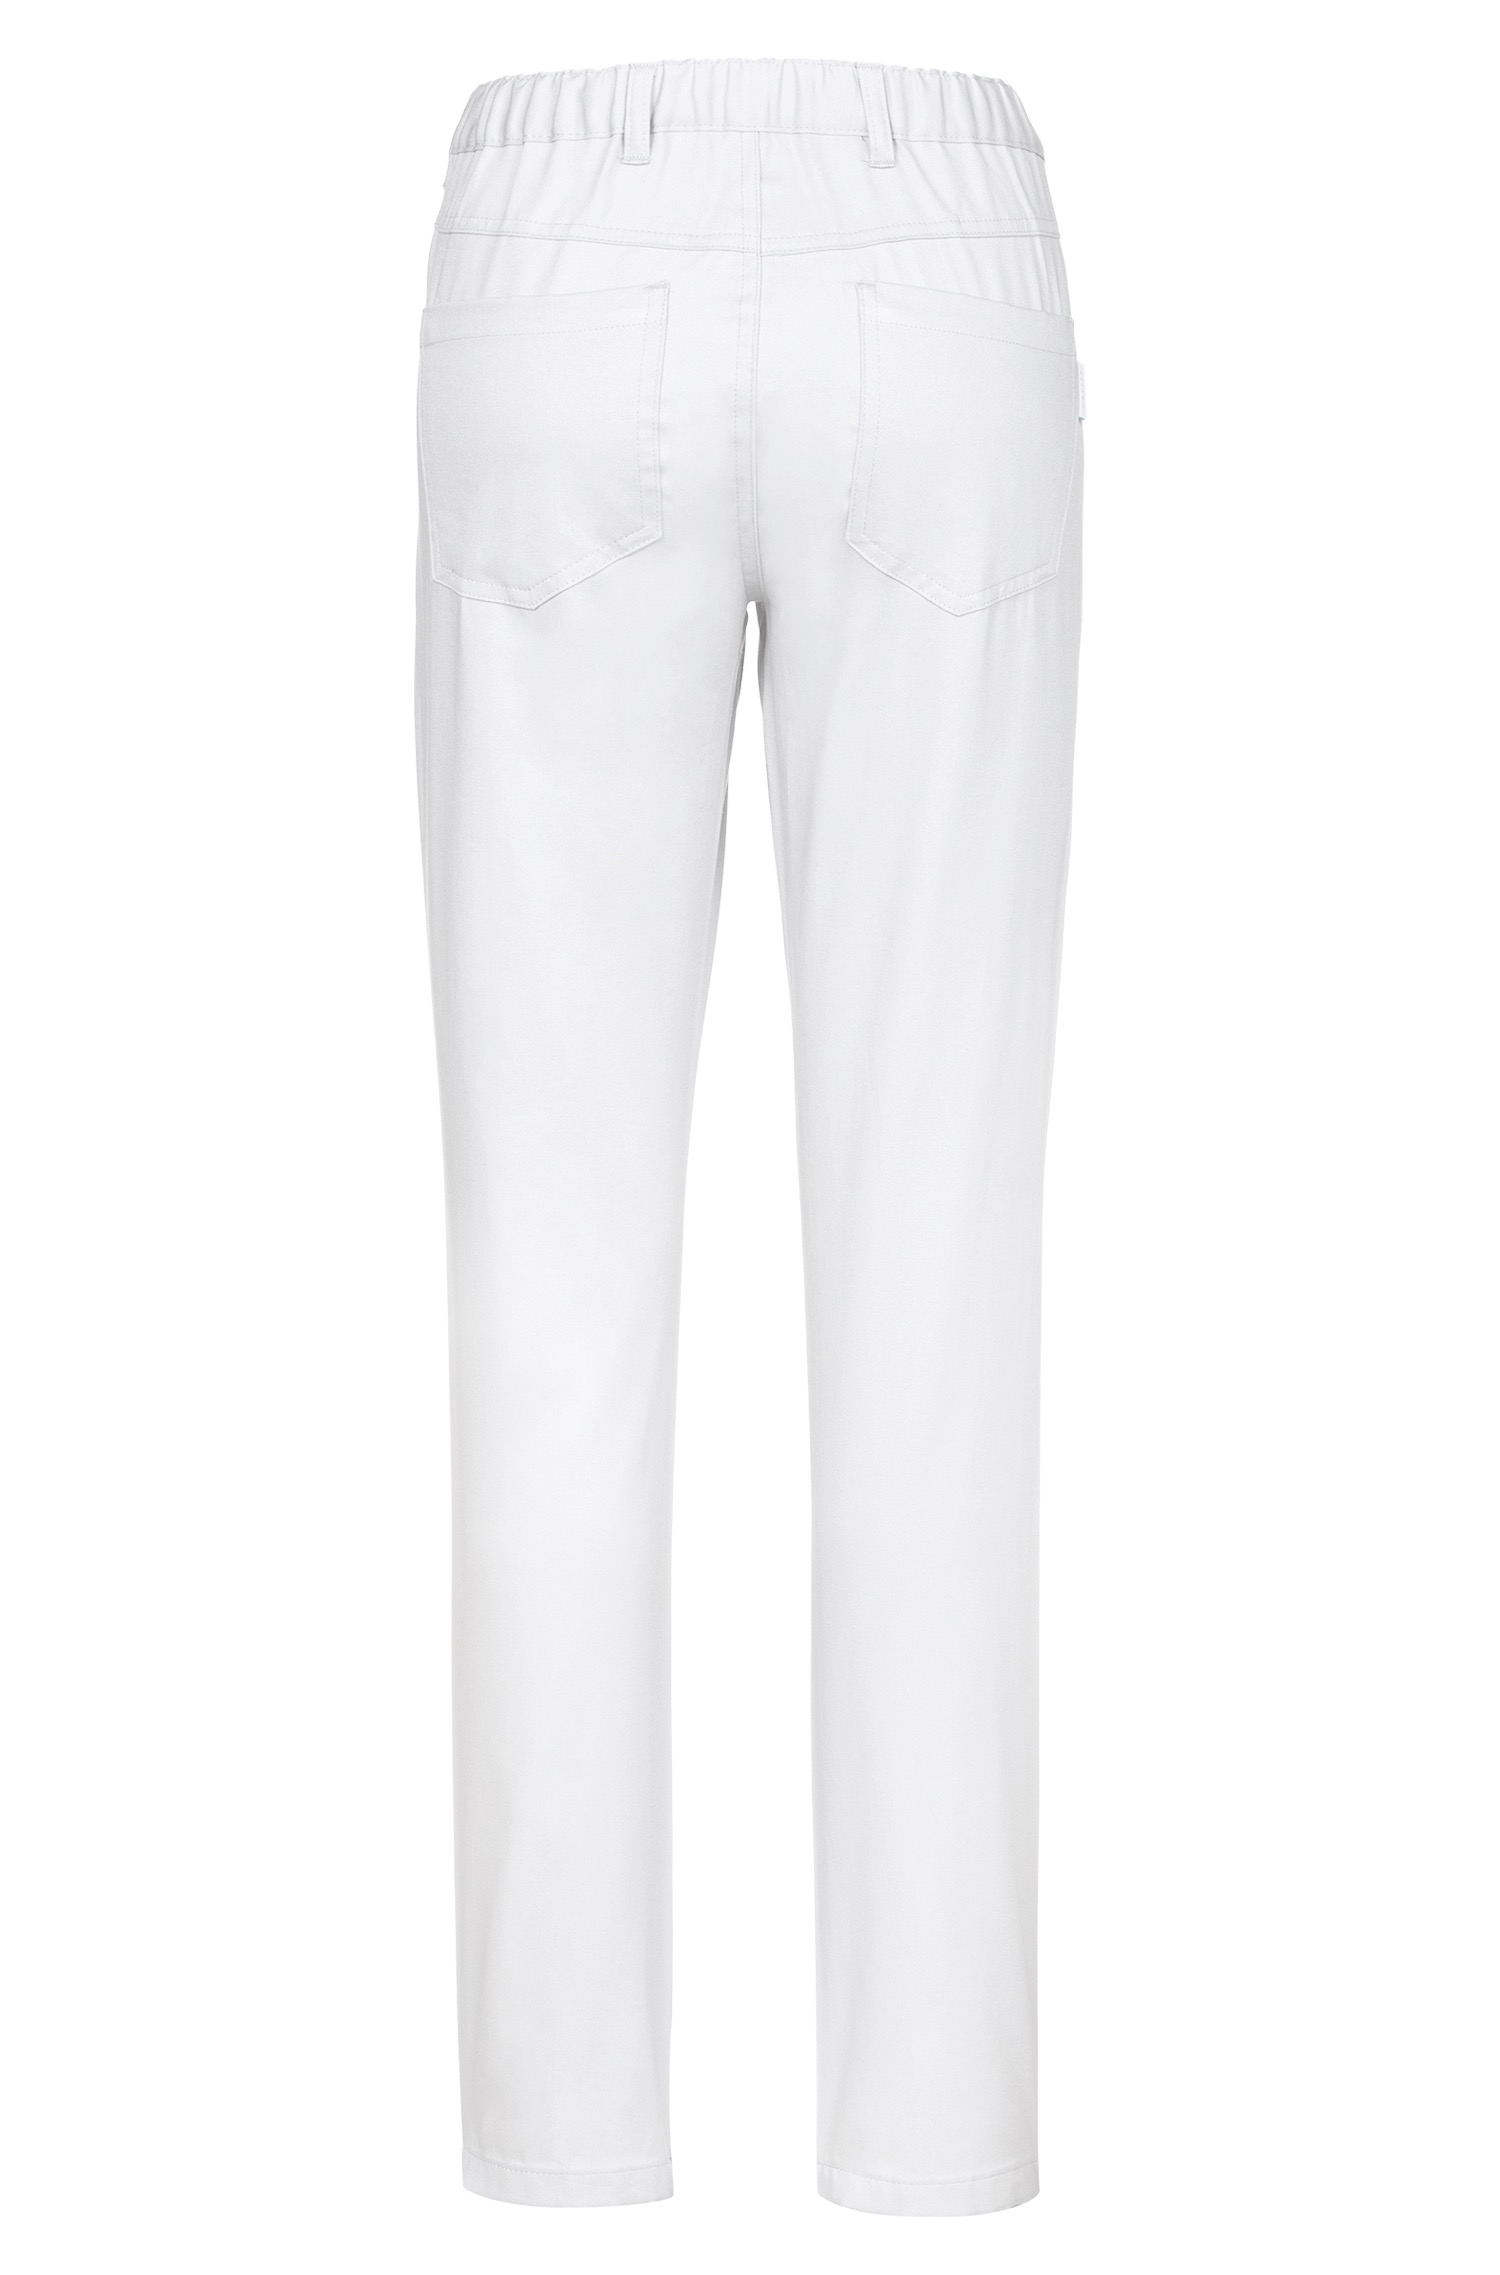 Ladies' cotton trousers with elastic waistband Greiff® White 34